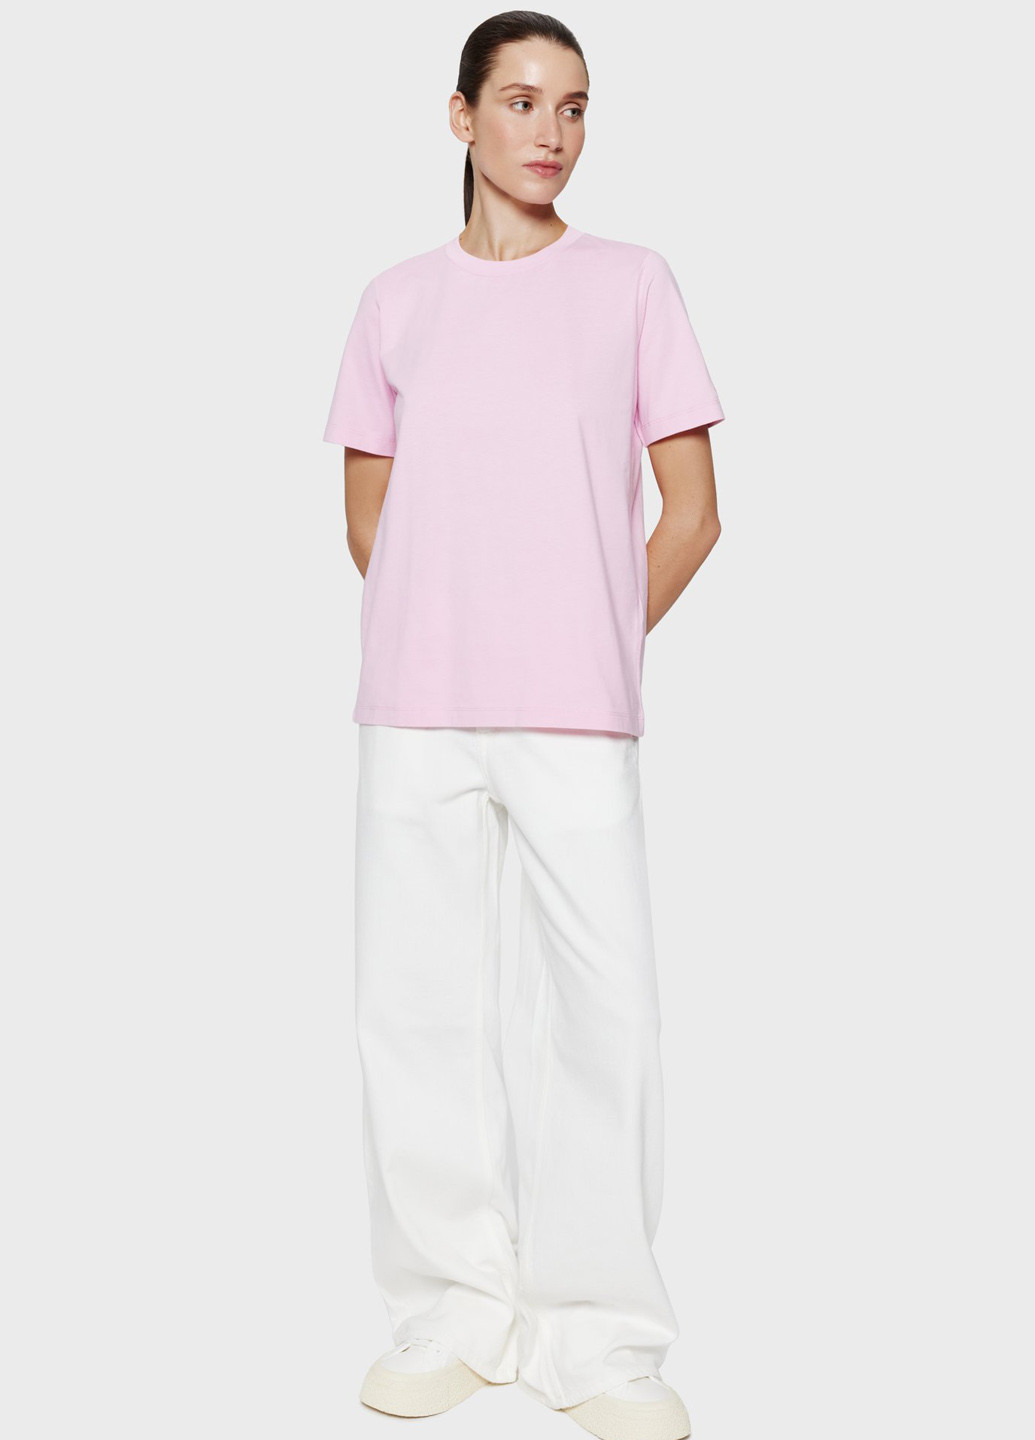 Светло-розовая летняя футболка PRPY